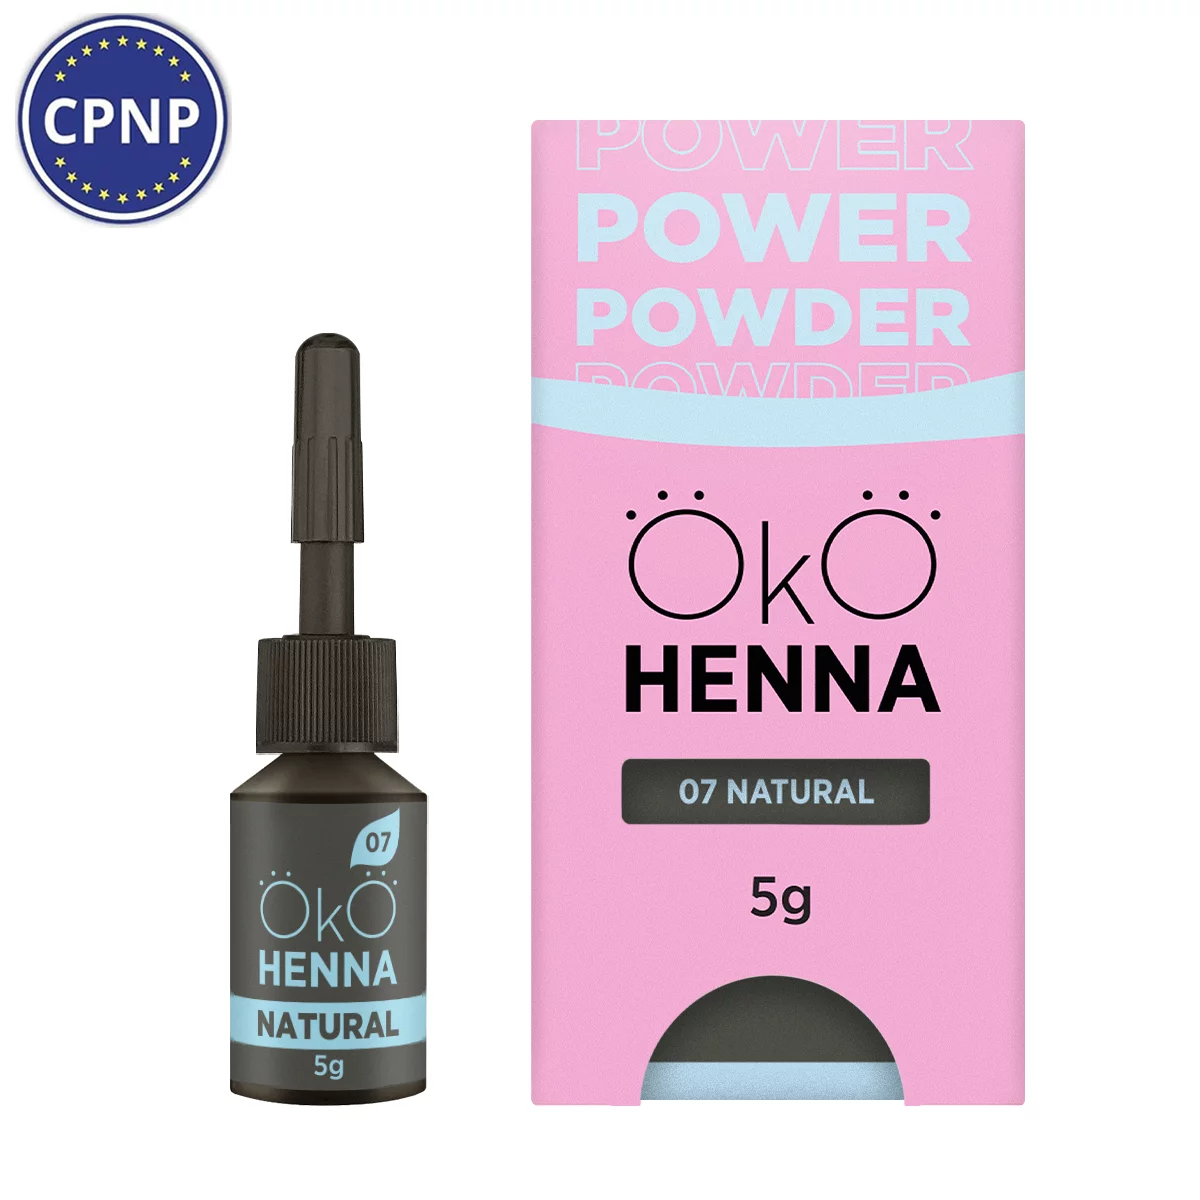 Къна за вежди OKO Power Powder, 07 Natural, 5g